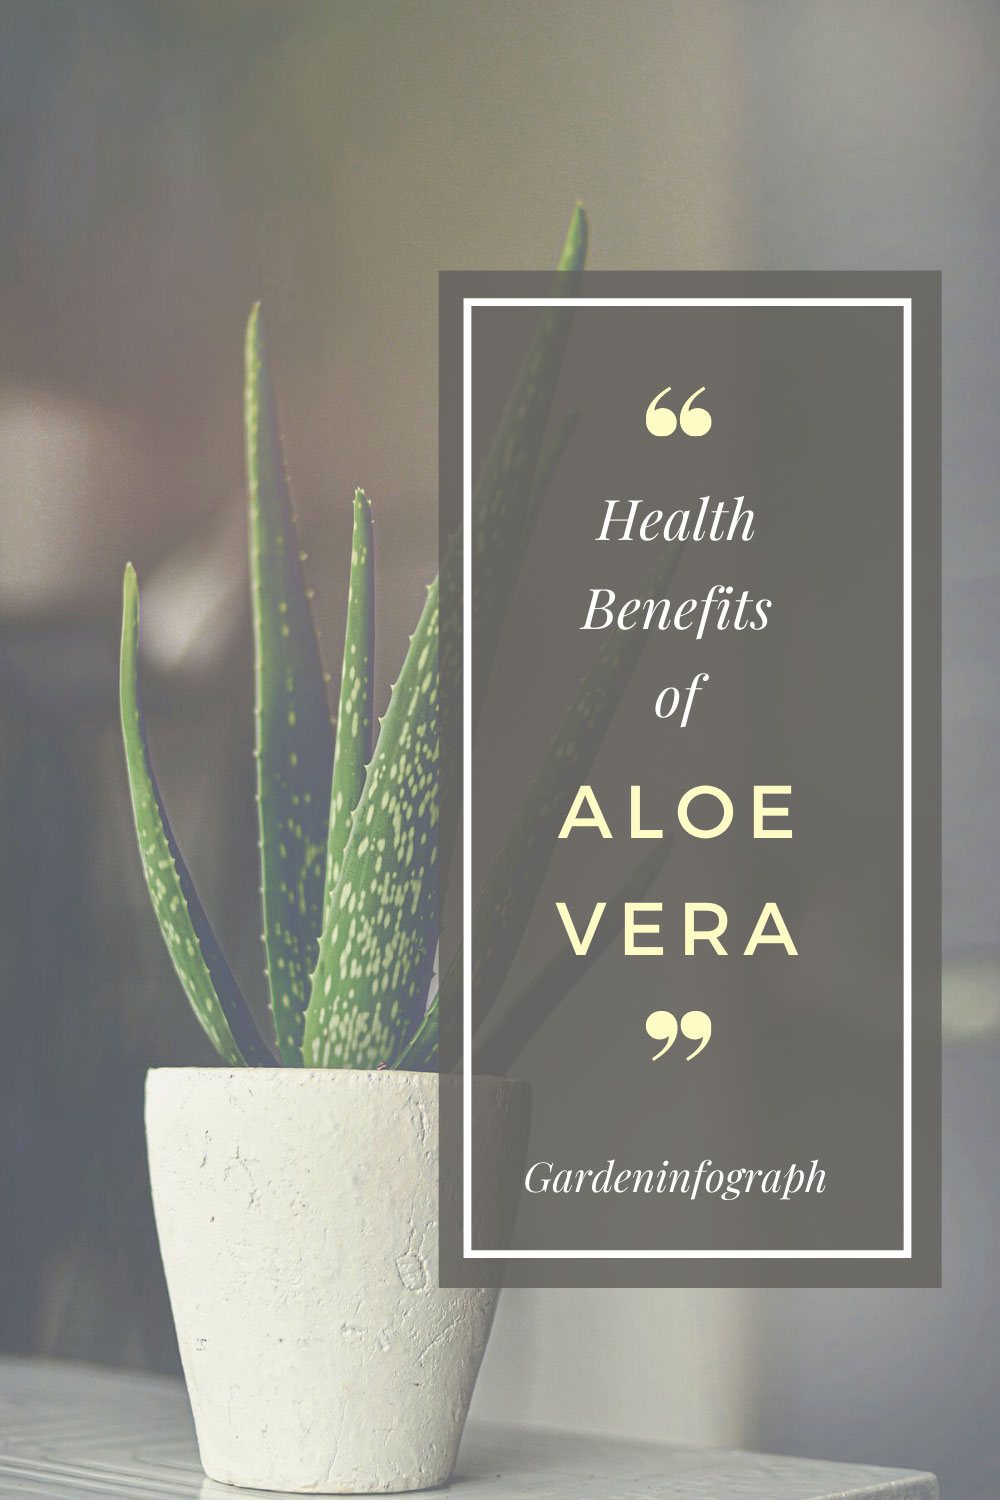 health benefits of aloe vera